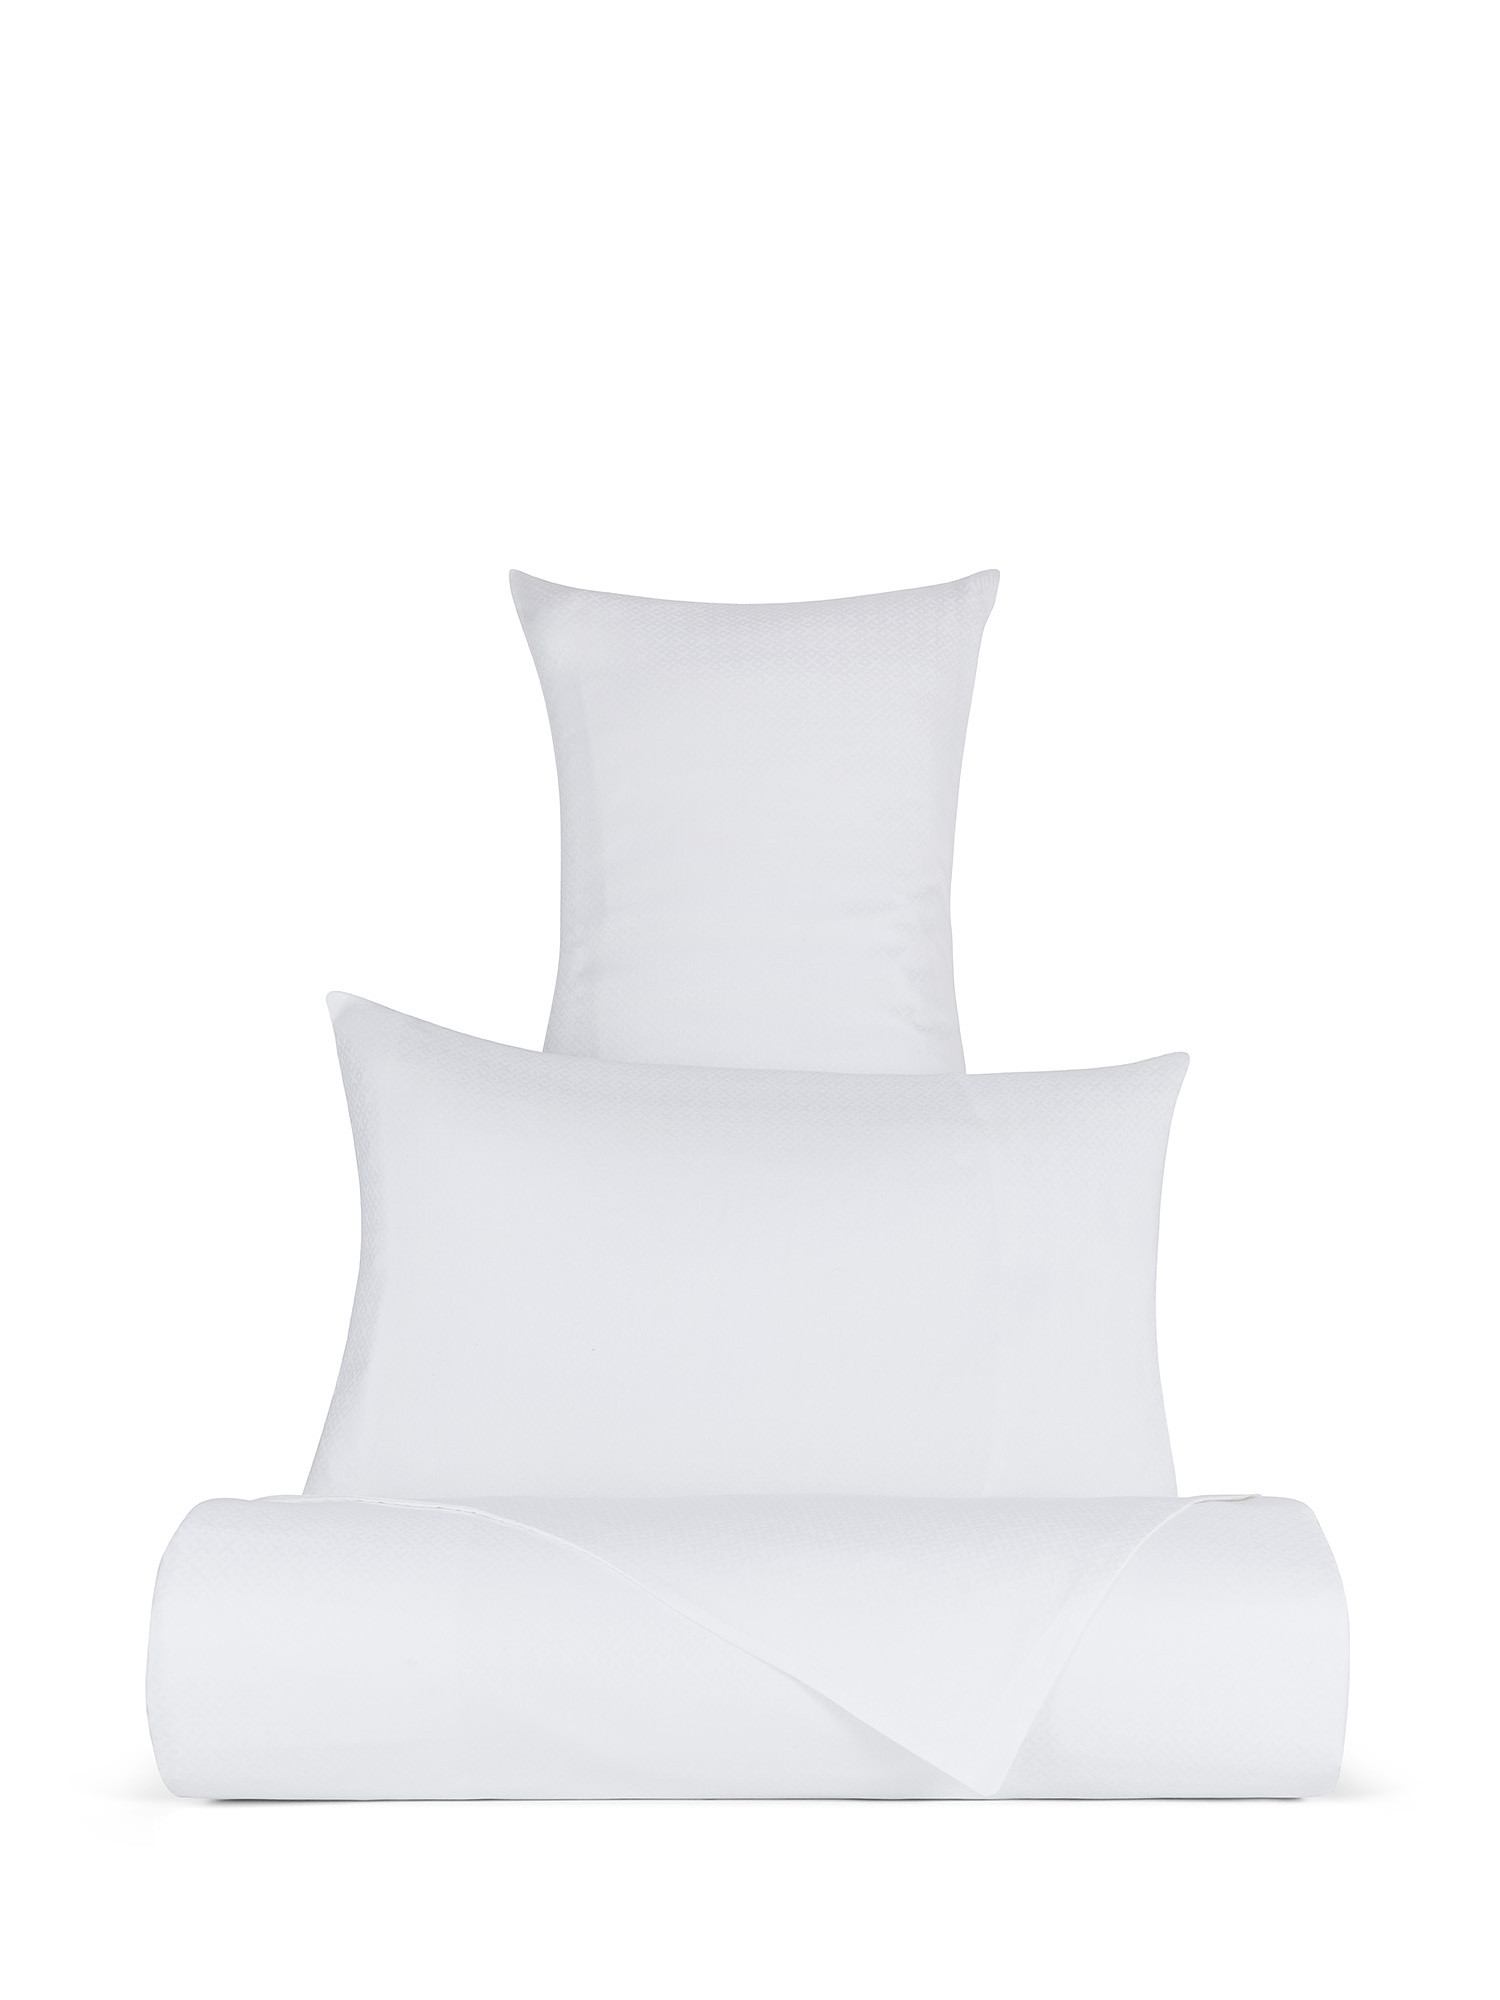 Cotton percale jacquard pillowcase Portofino, White, large image number 2